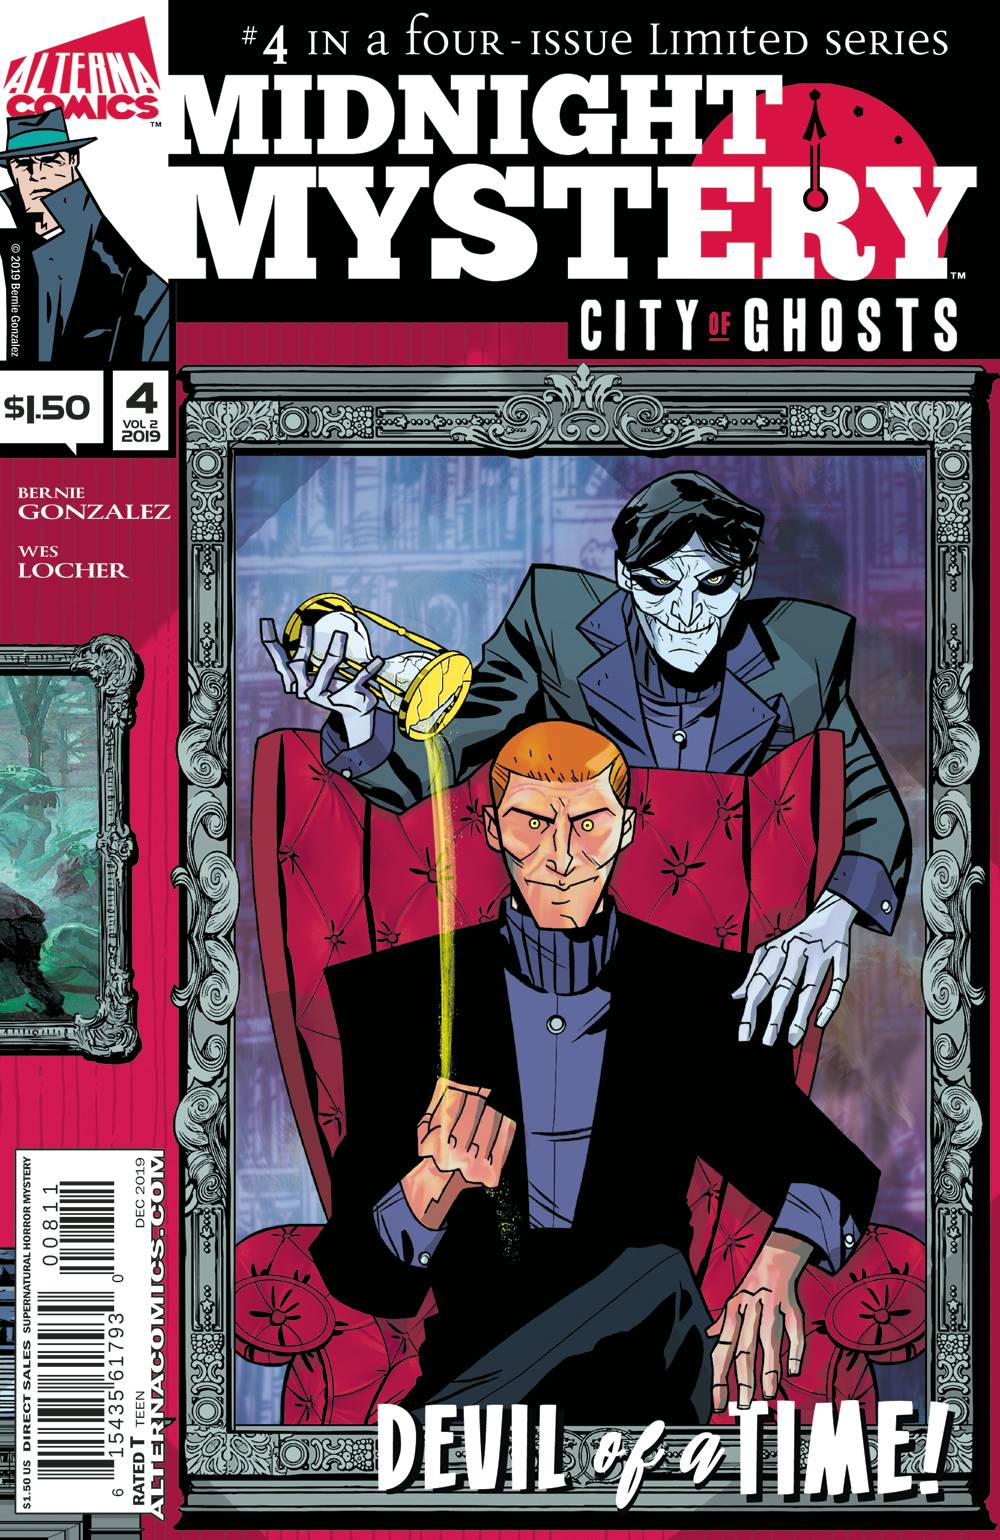 Midnight Mystery Volume 2 Volume 8 City of Ghosts #4 (Of 4)